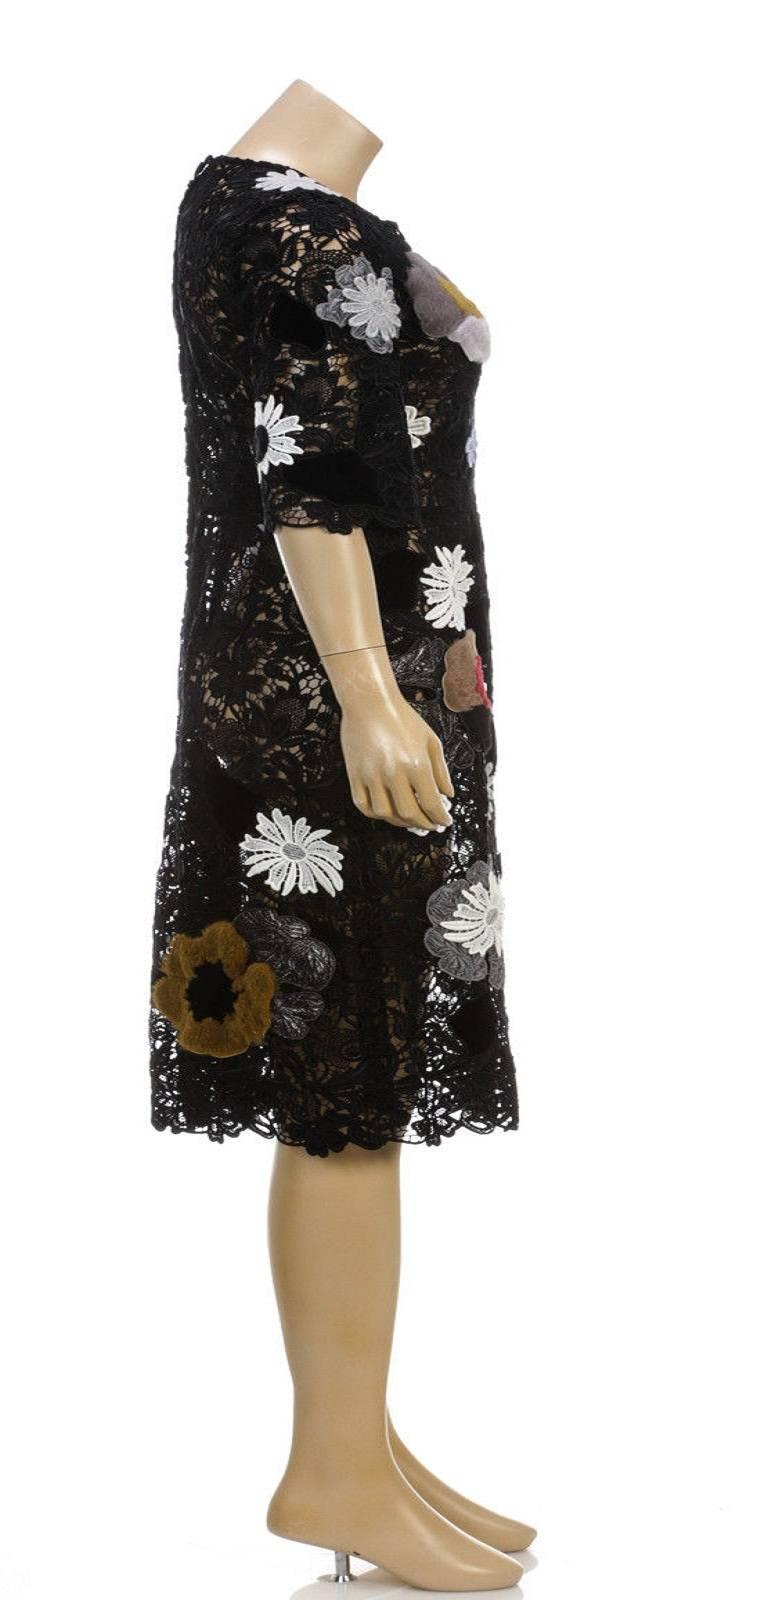 Women's Dolce & Gabbana Black Half Sleeve Macrame Floral Applique Dress AW 14 (Size 40) For Sale